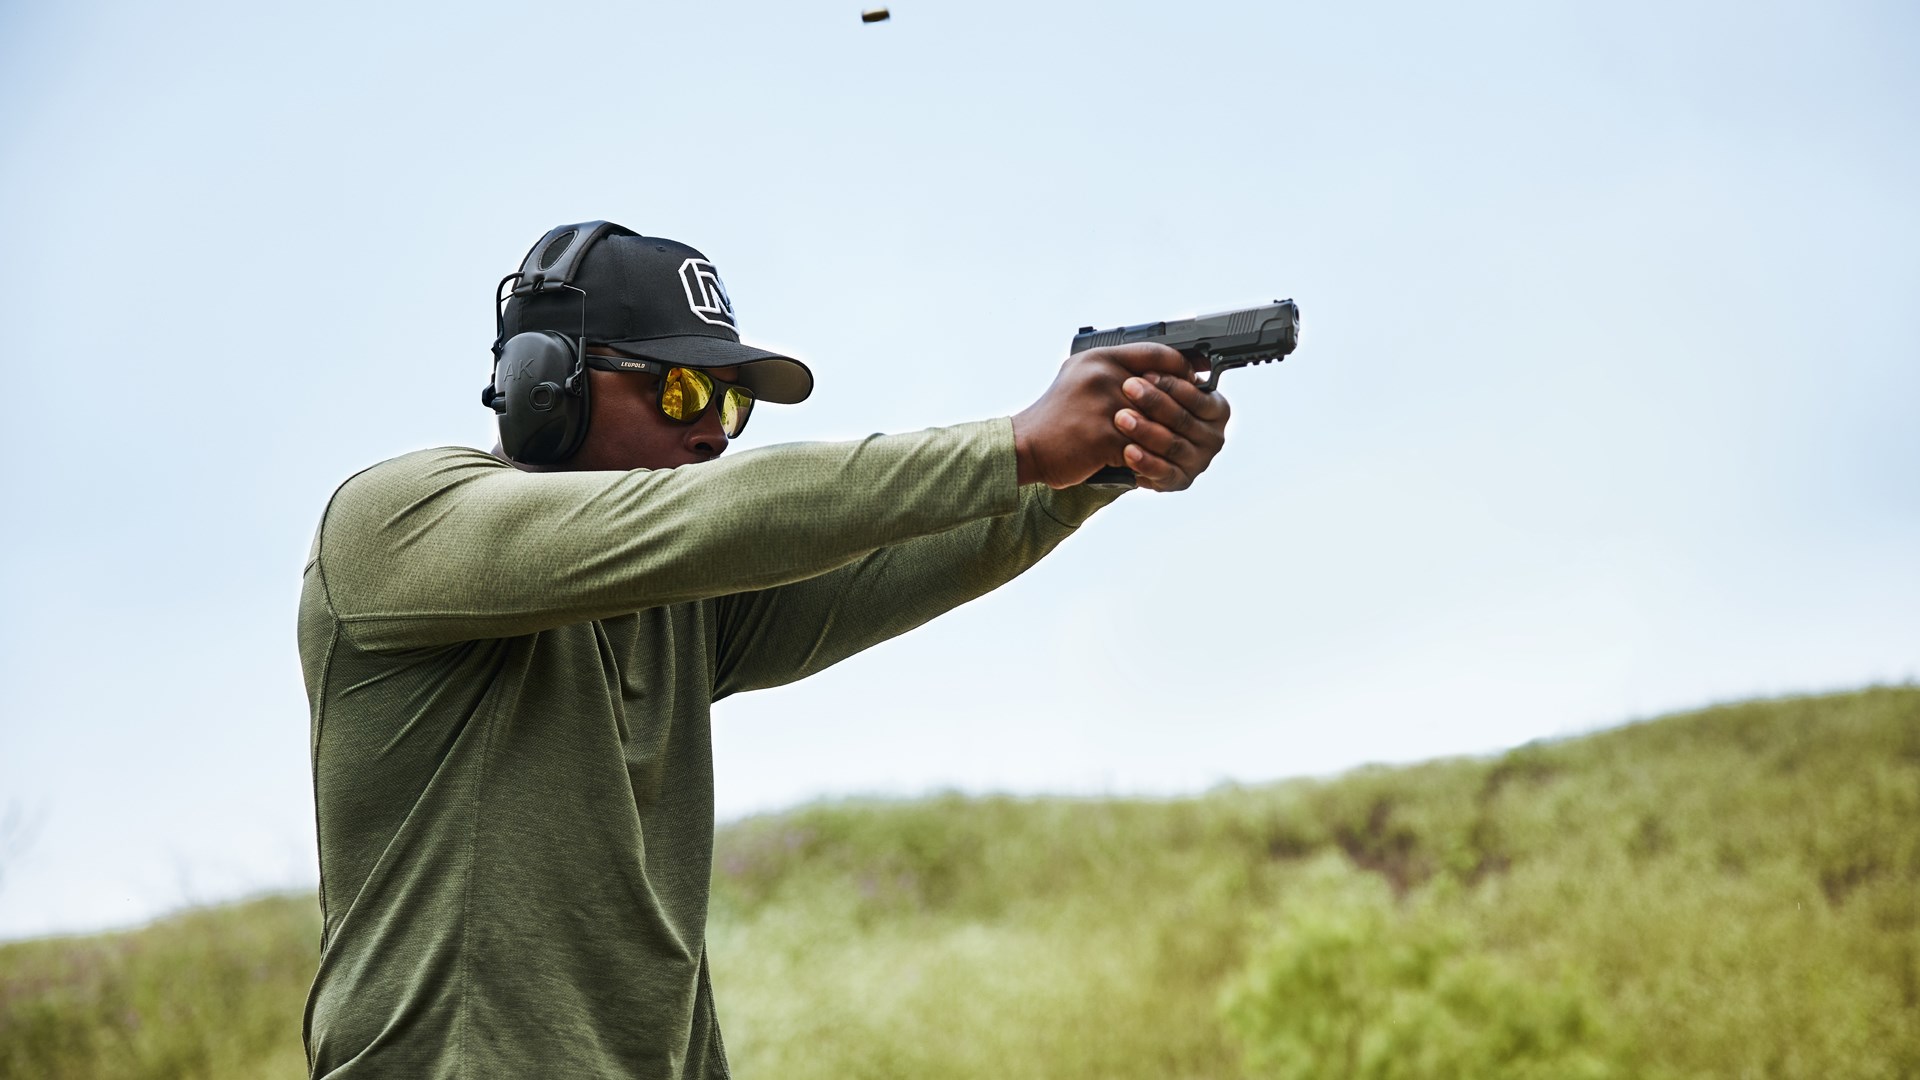 Man shooting Daniel Defense H9 on an outdoor range.